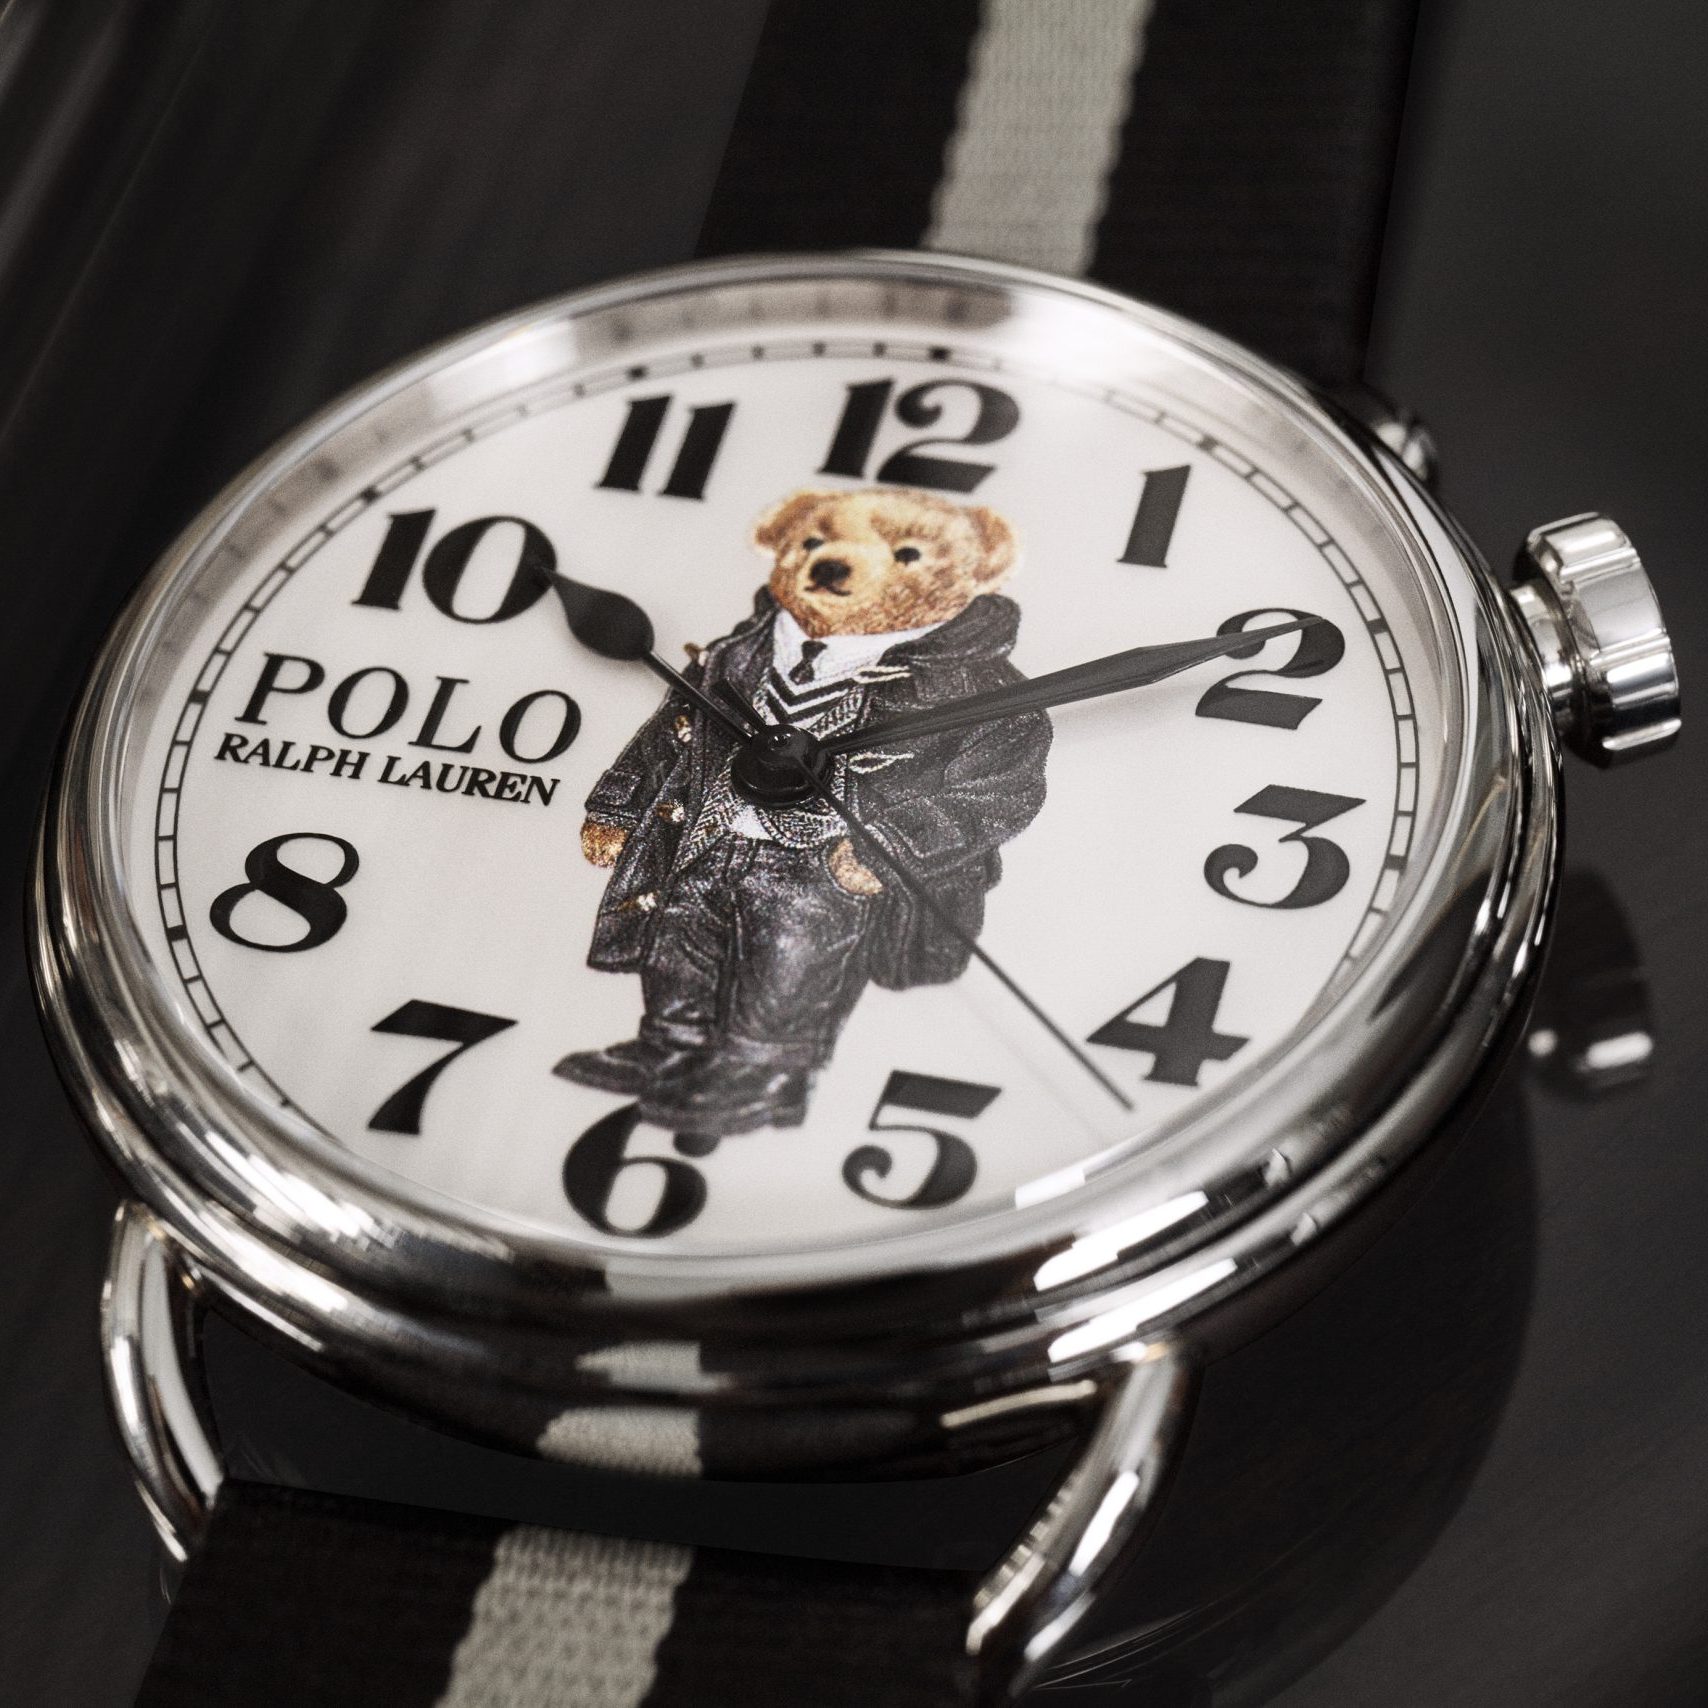 Piaget - Polo Perpetual Calendar Ultra-Thin Watch - G0A48005 | Art Of Time